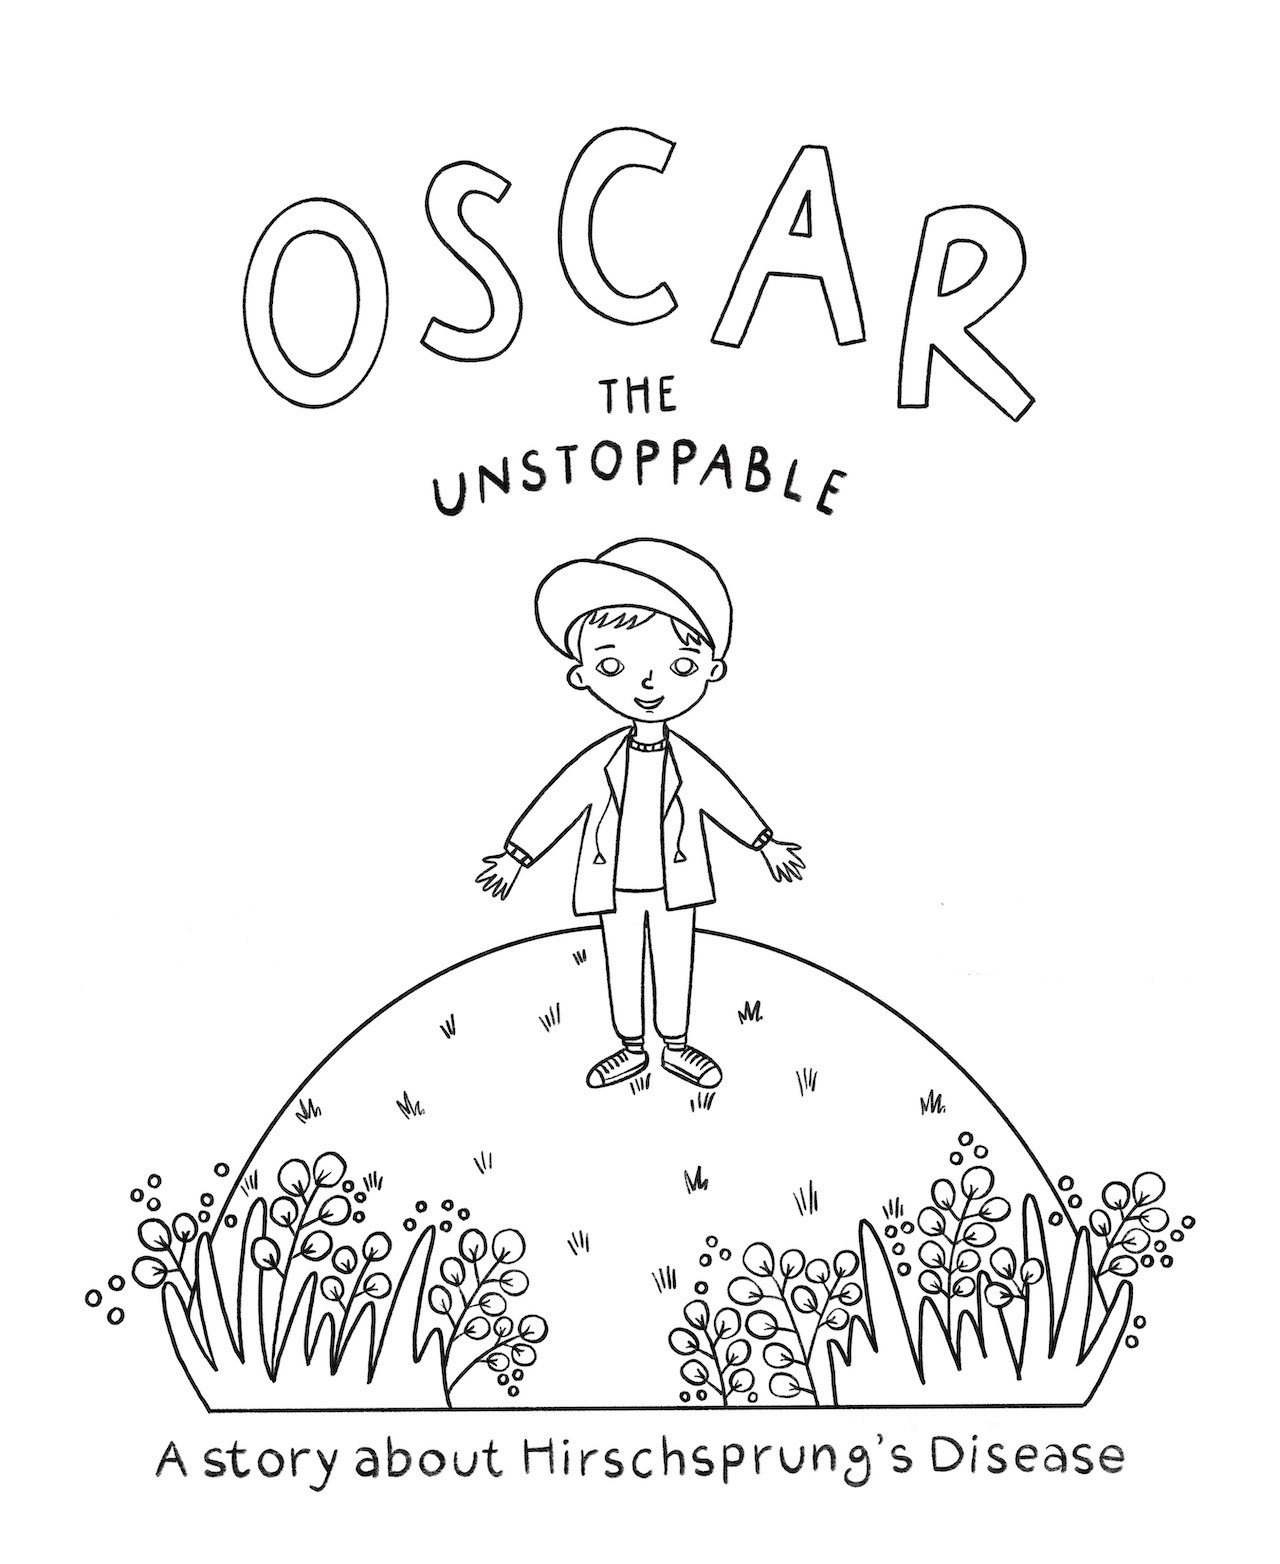 Oscar the Unstoppable